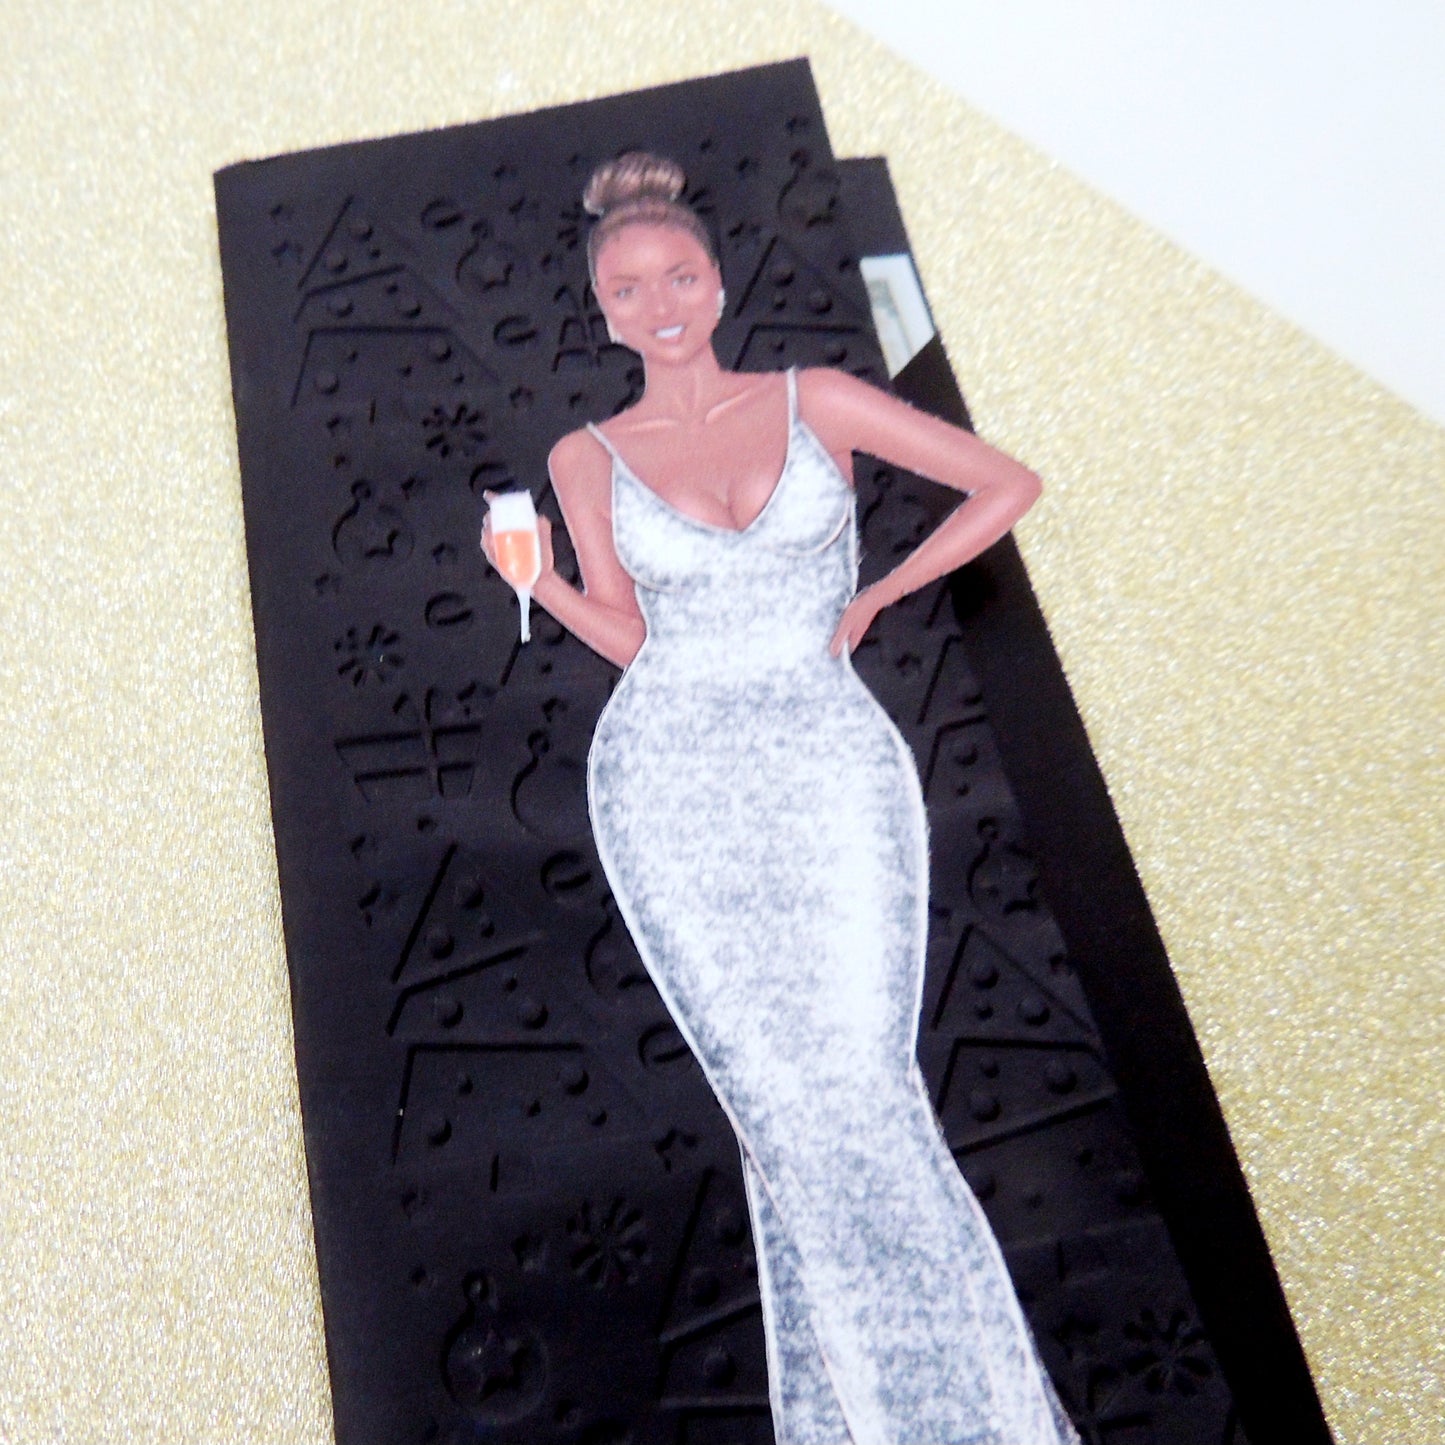 Glitter Curvy Black Woman Silver Money Holder Greeting Card